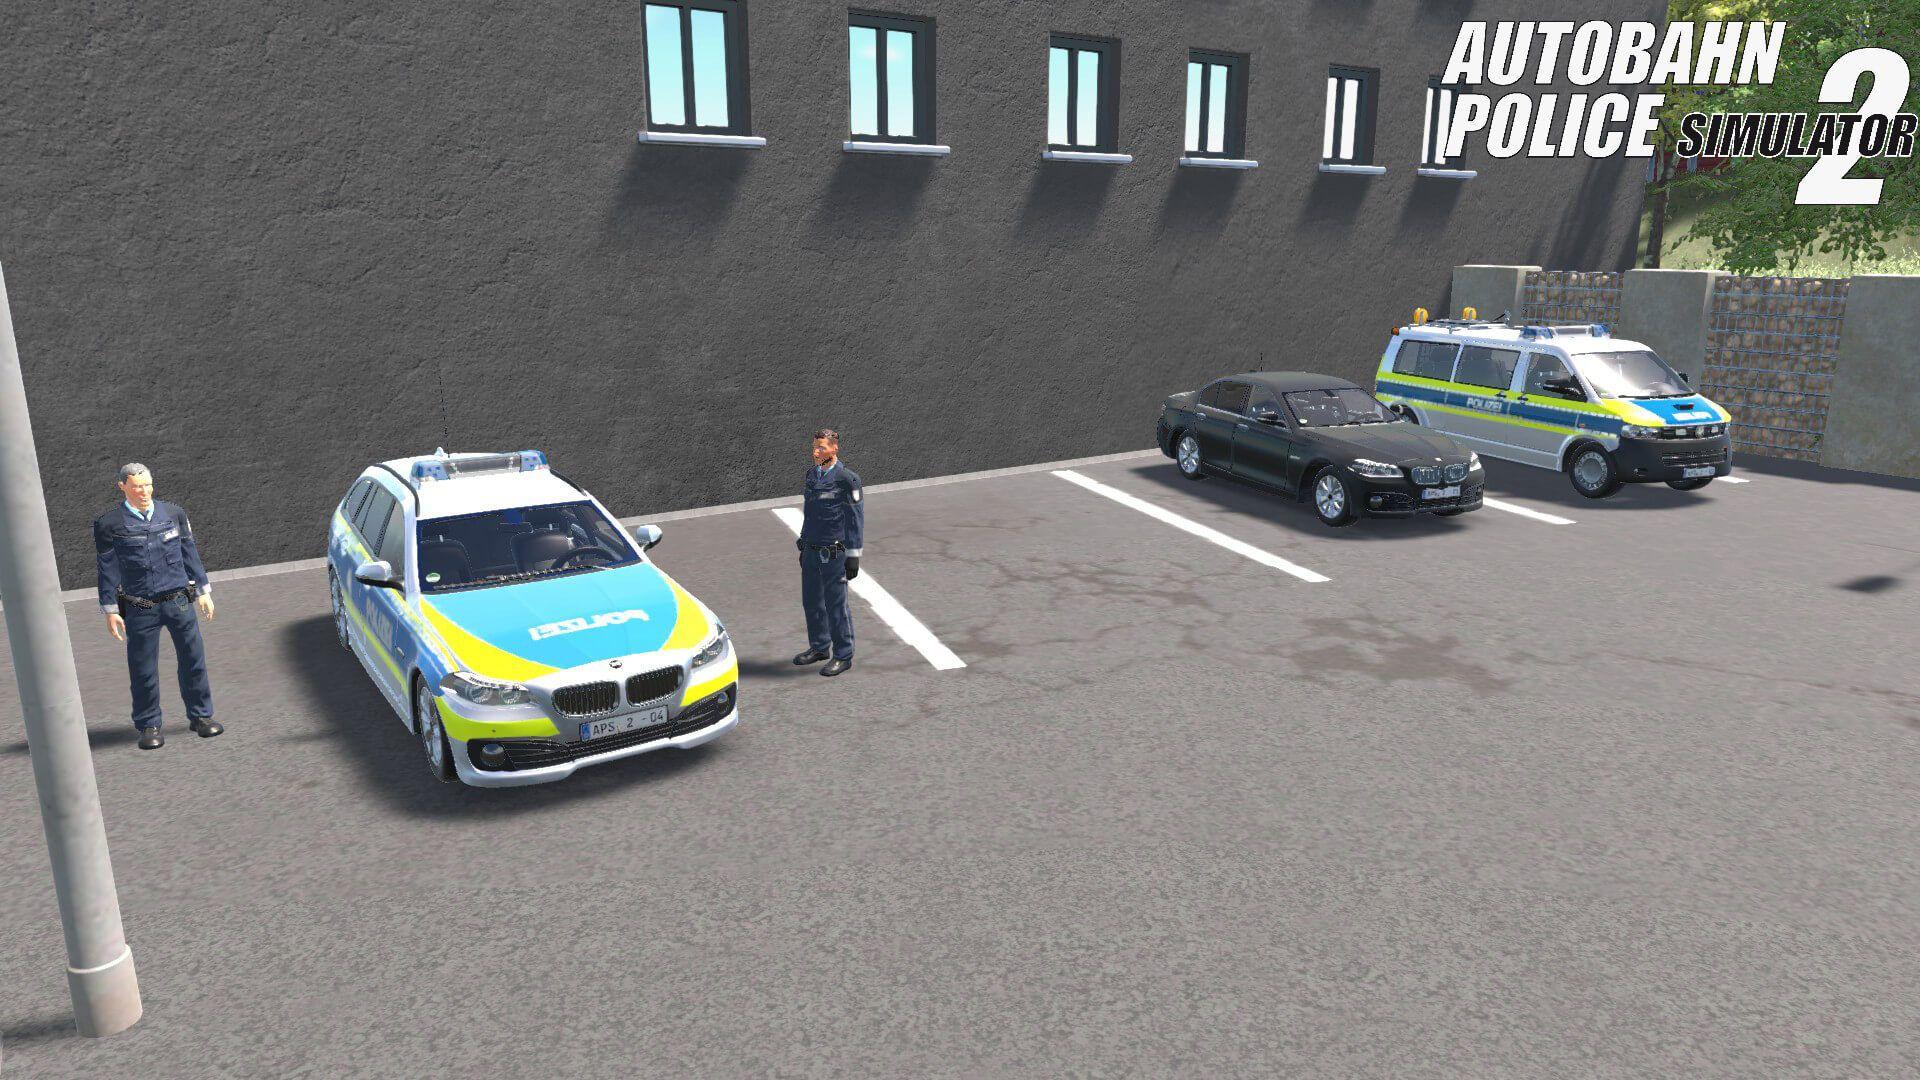 Autobahn Police Simulator 2 Ps4 17